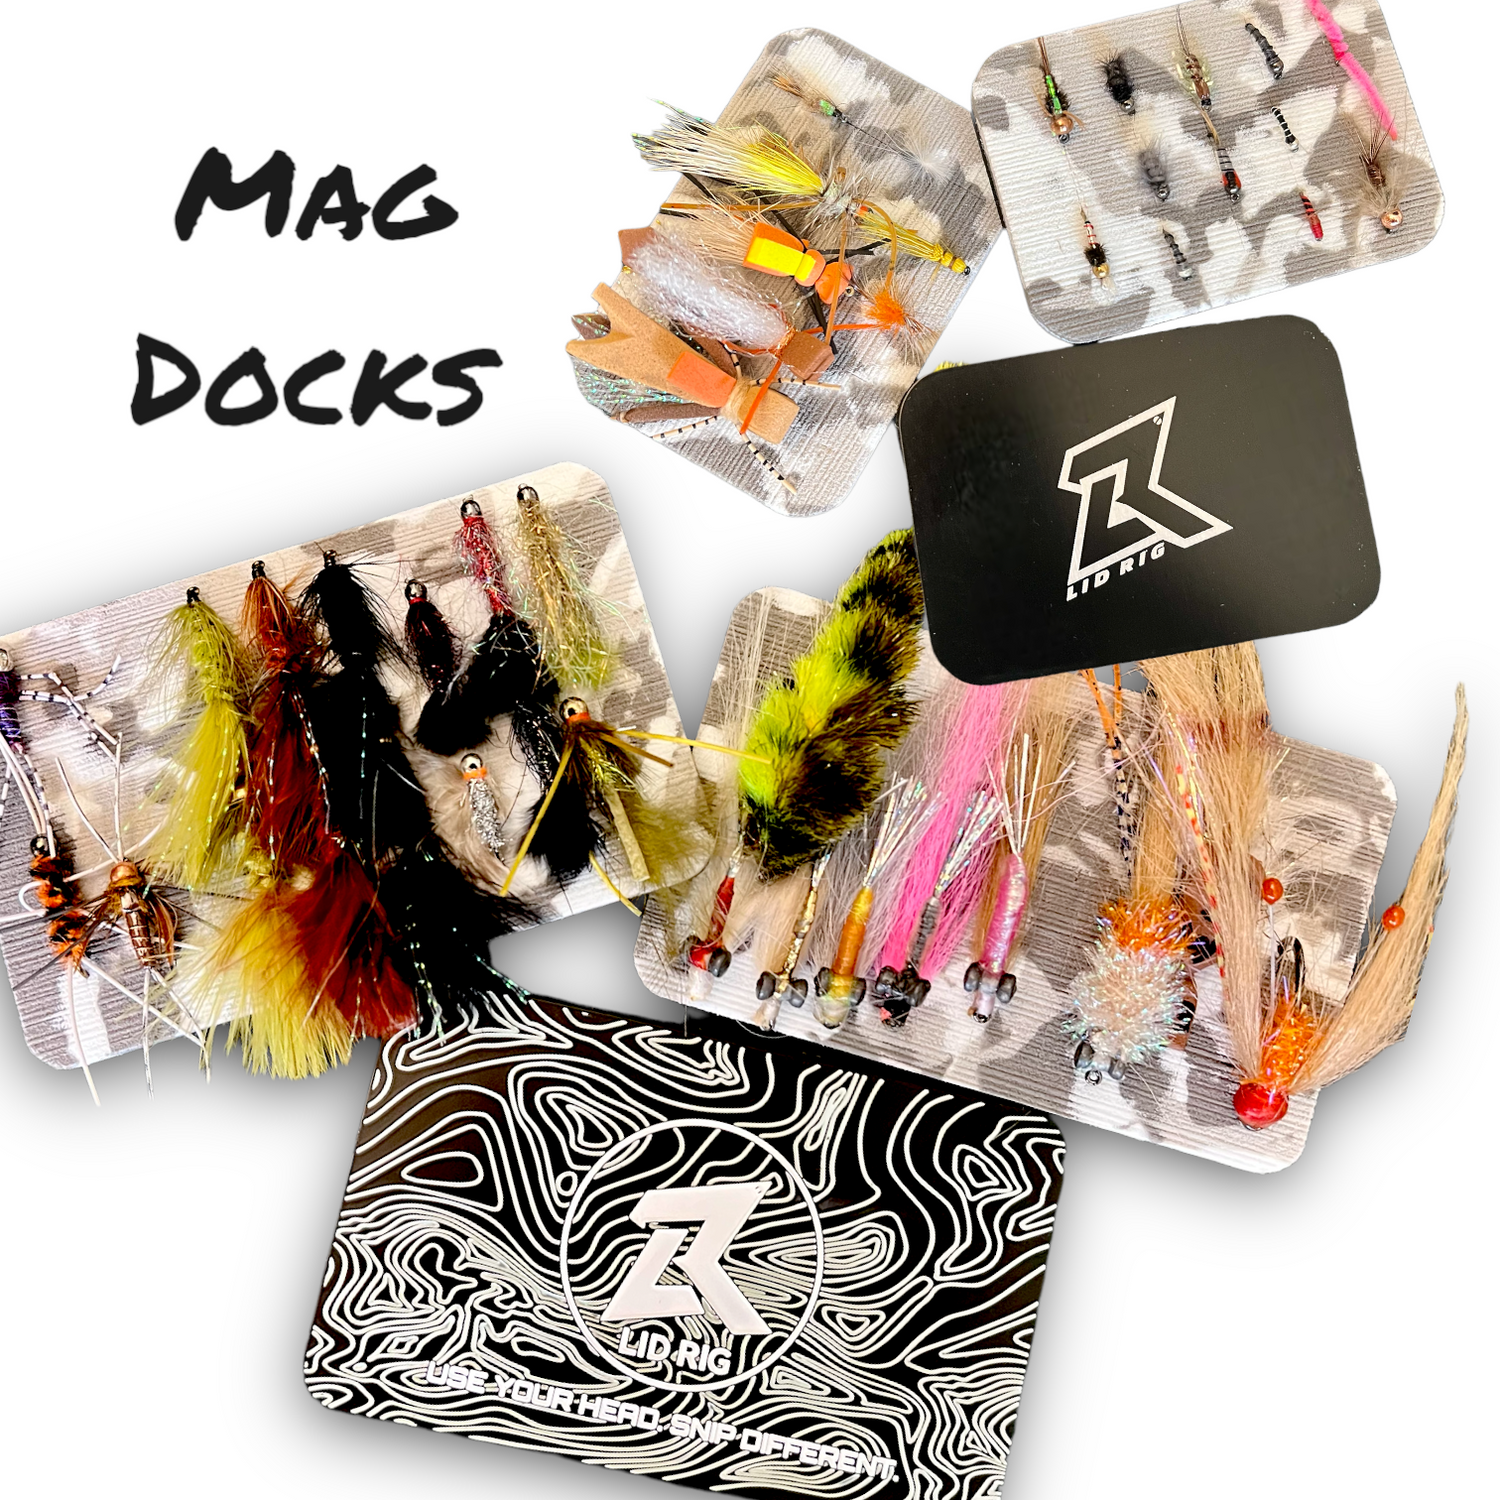 Mag Docks - Lid Rig